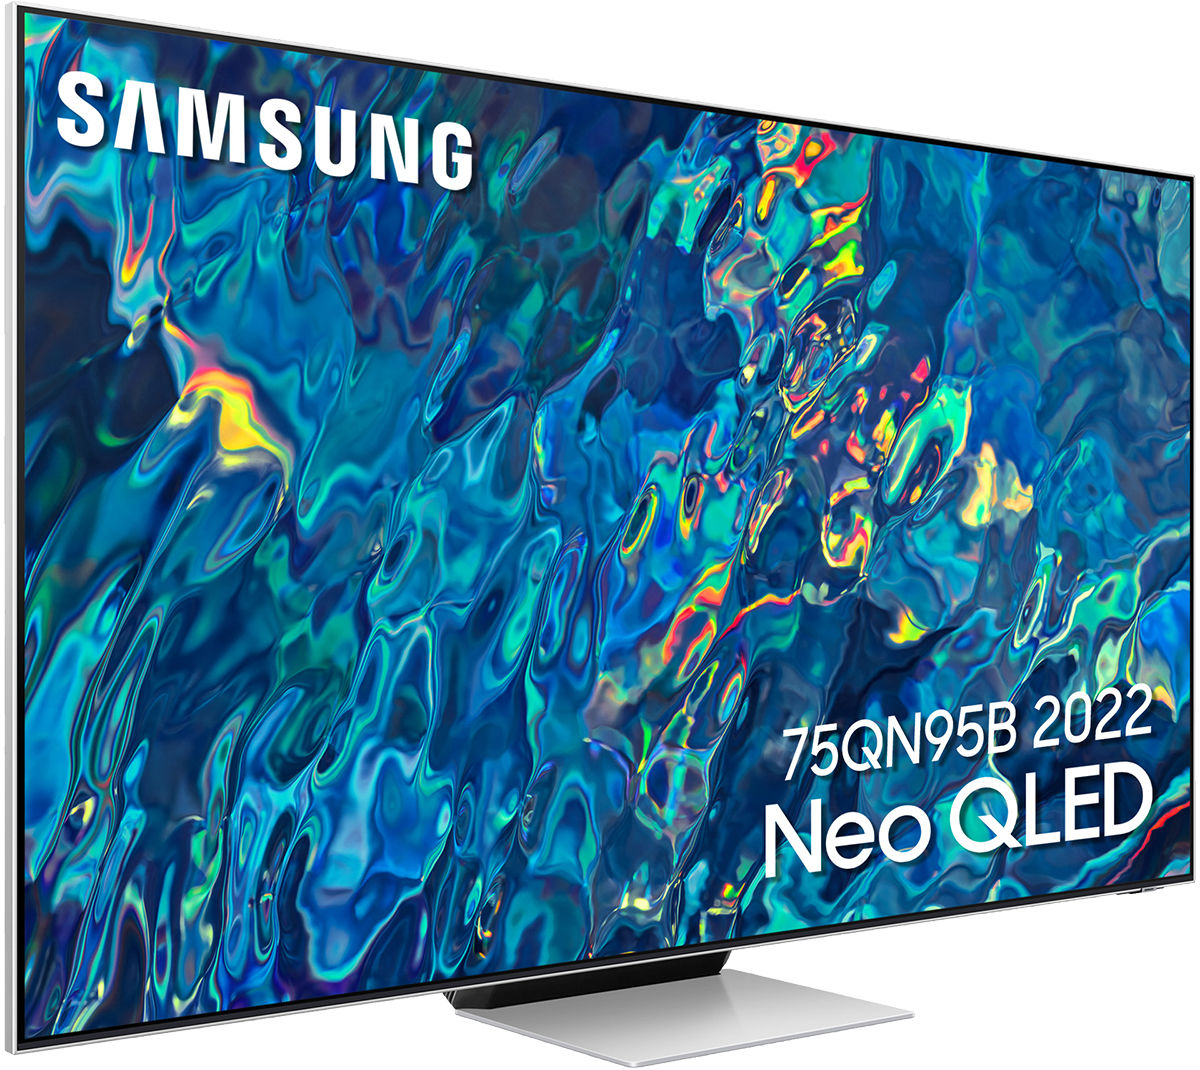 Gamme TV Neo QLED Samsung QN95B